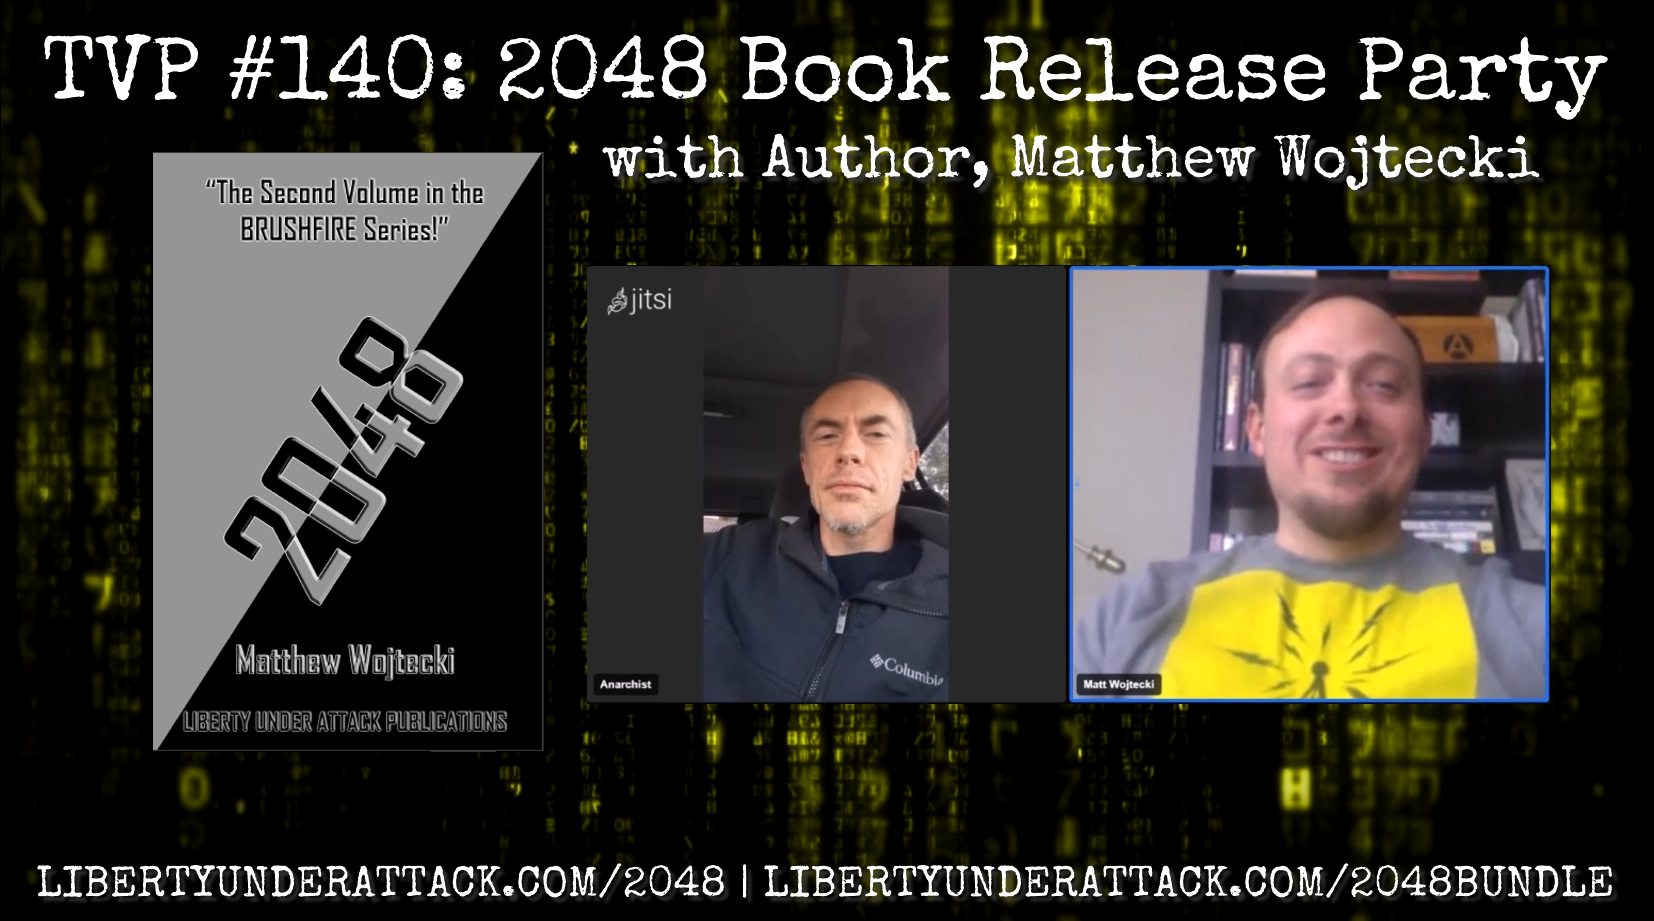 TVP #140: 2048 Book Release Party with Author, Matthew Wojtecki